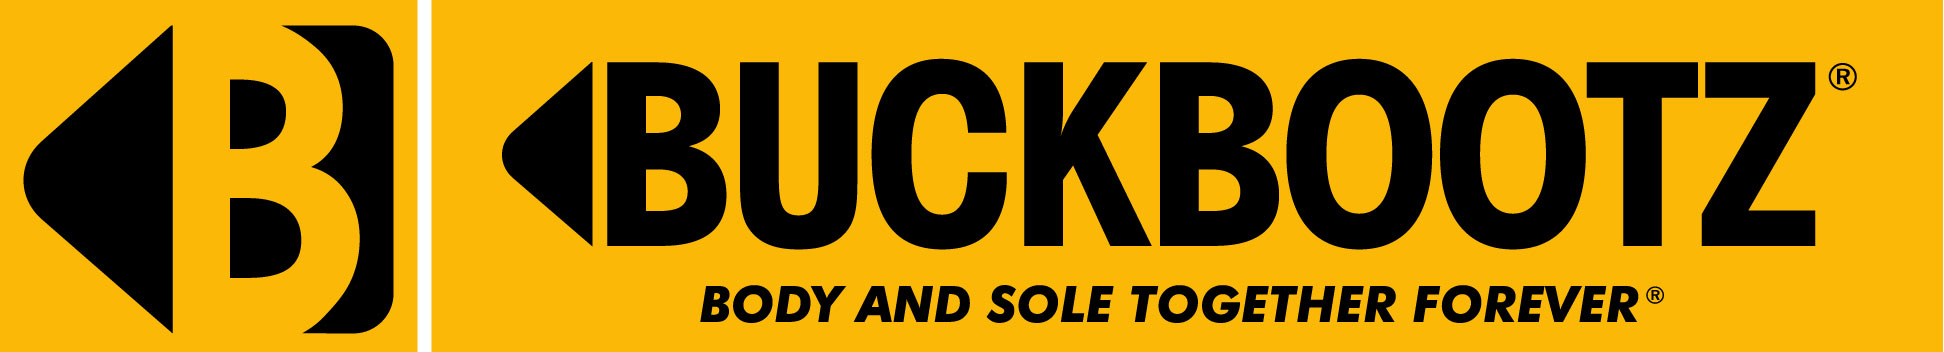 Buckbootz New Logo